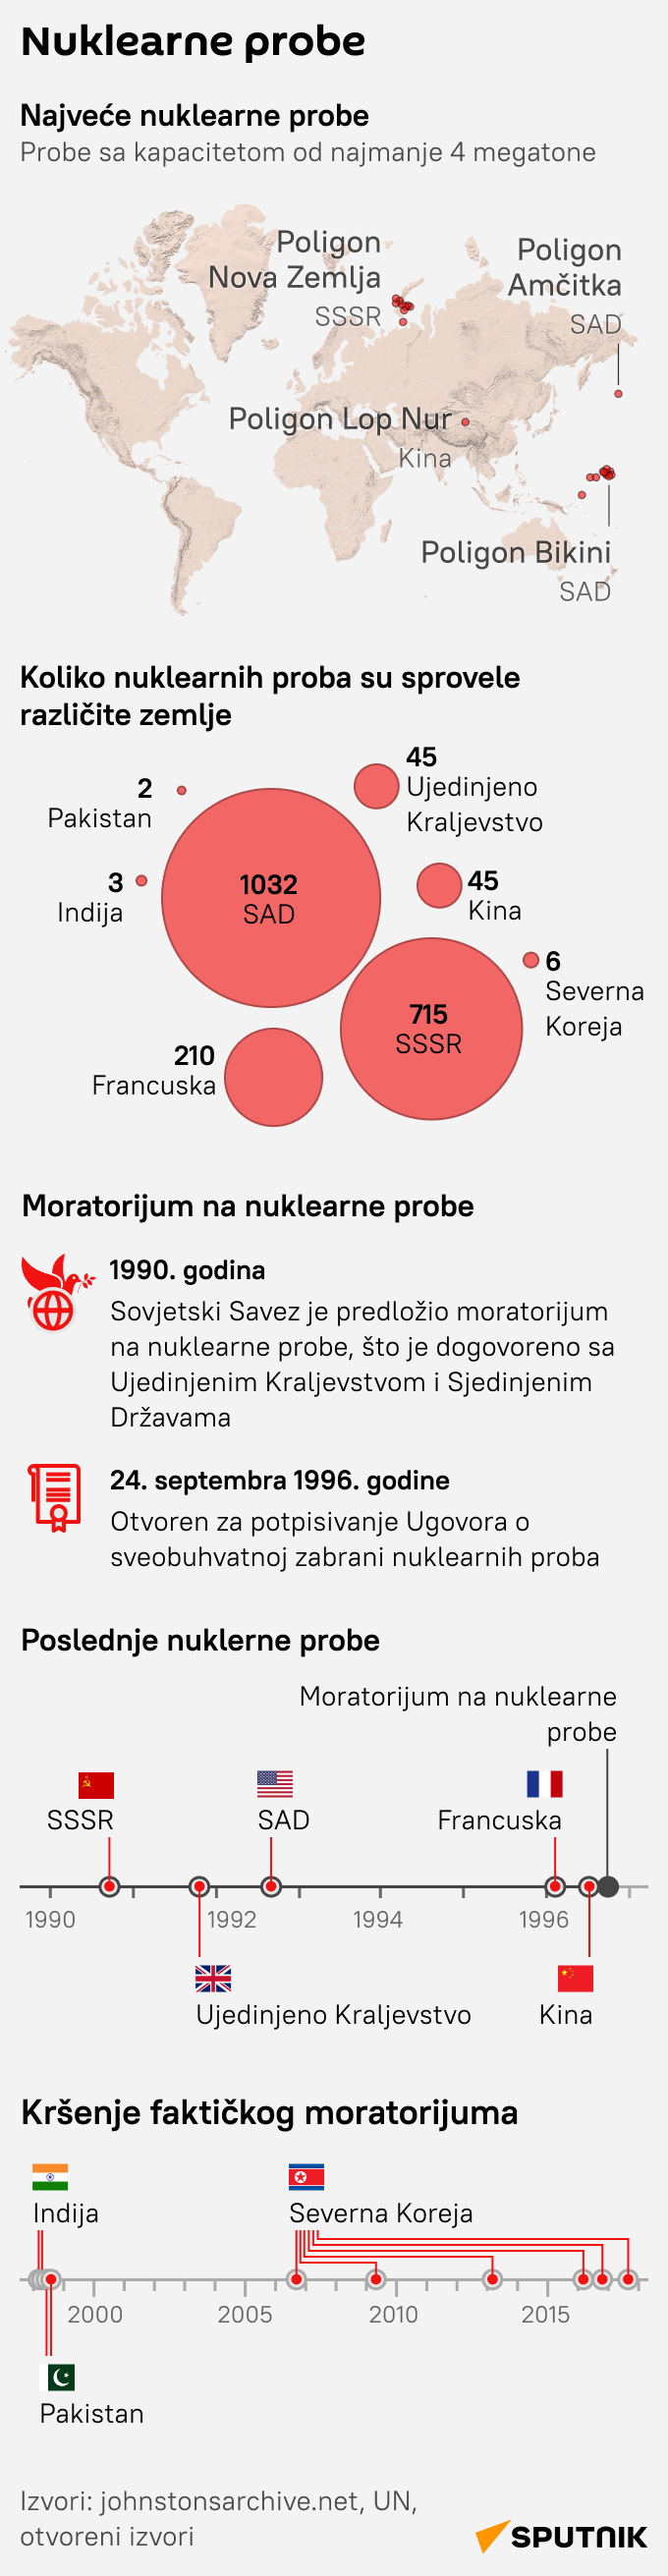 Infografika nuklearne probe LATINICA mob - Sputnik Srbija